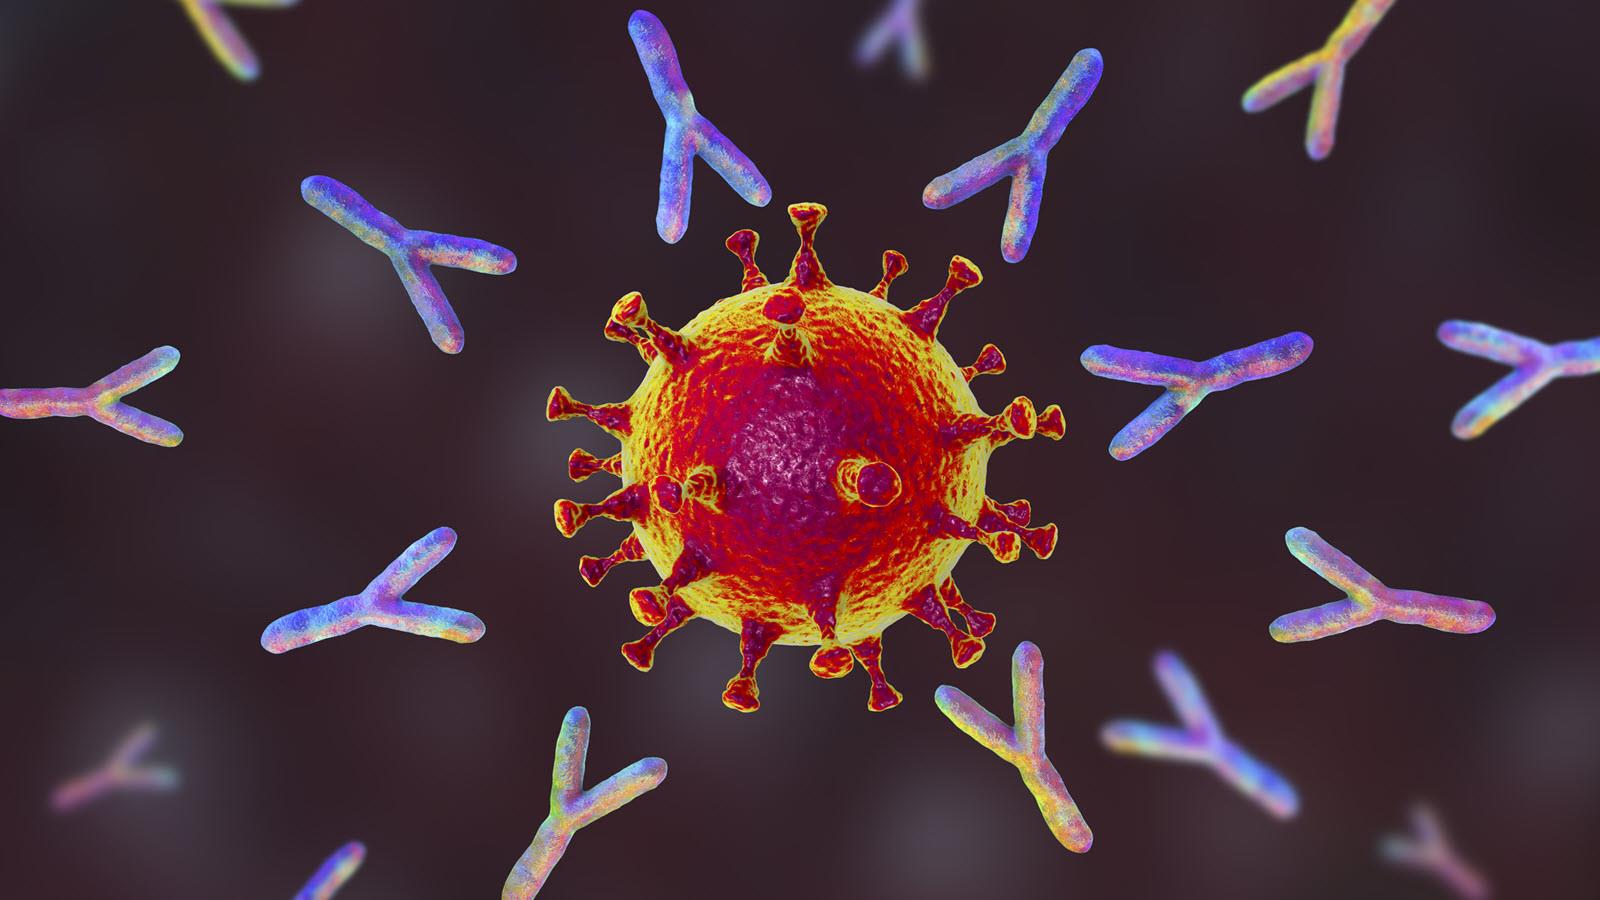 SARS-CoV-2 virus with spikes